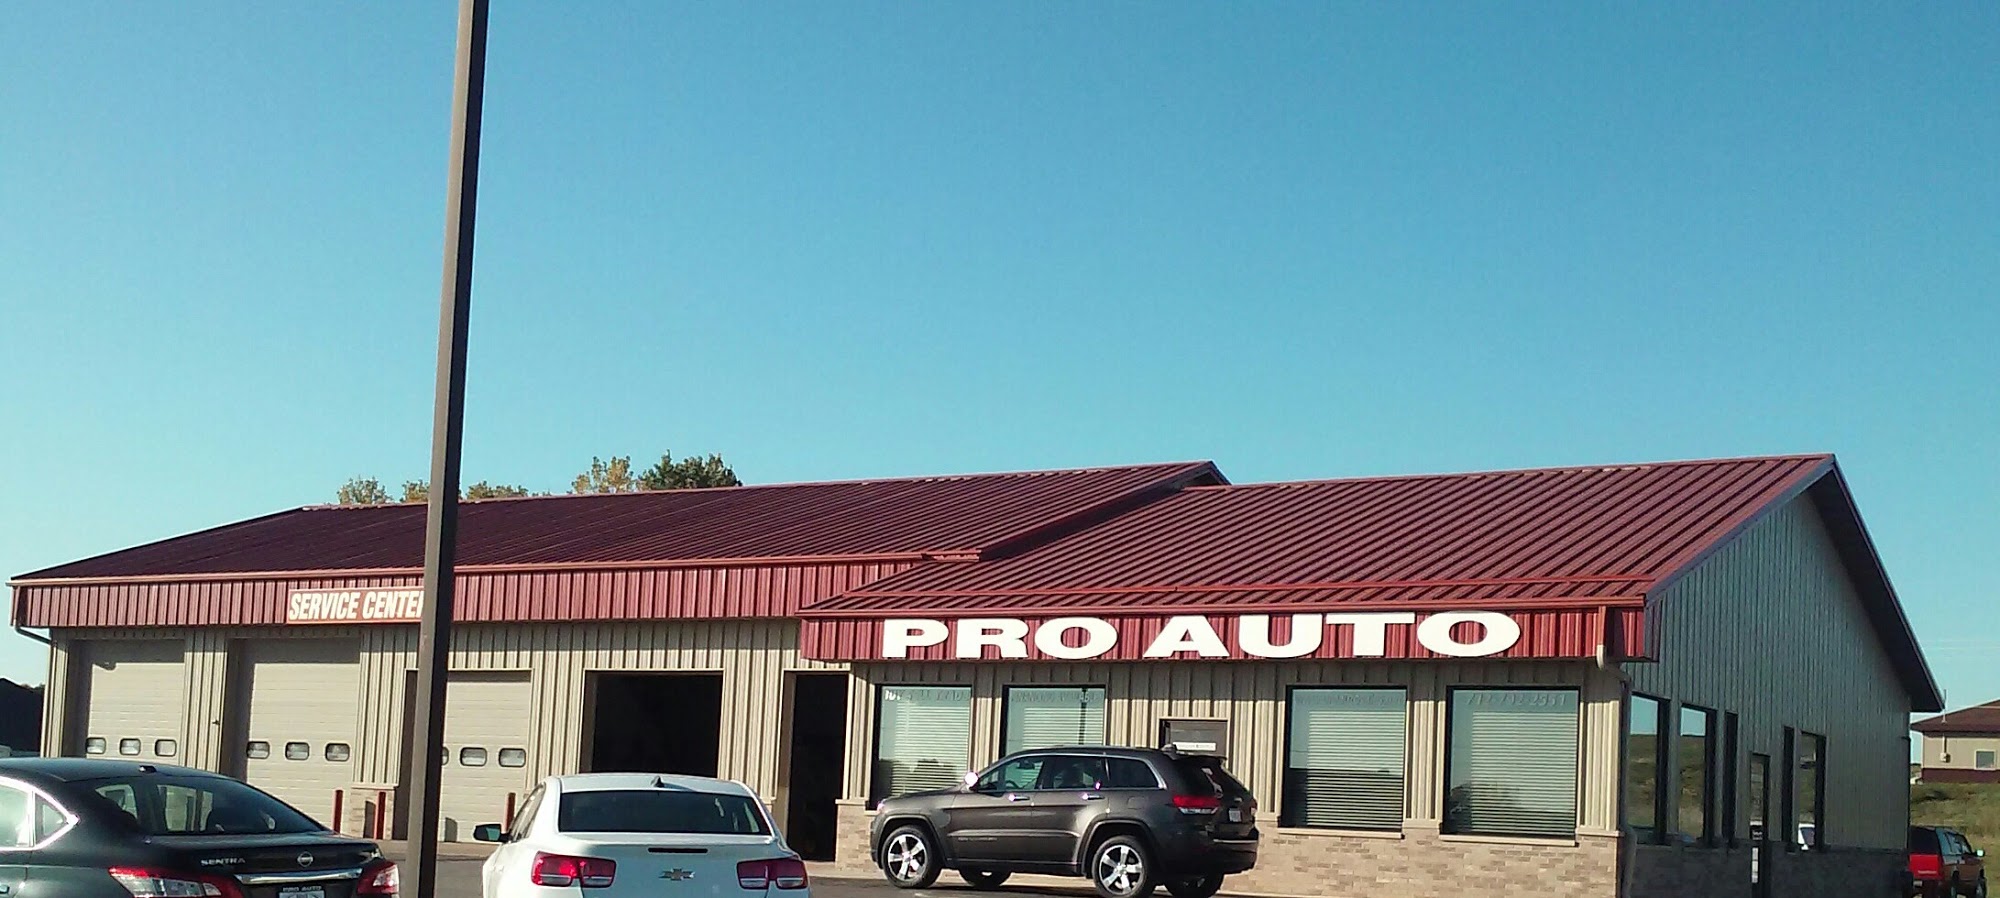 Pro Auto Sales & Service